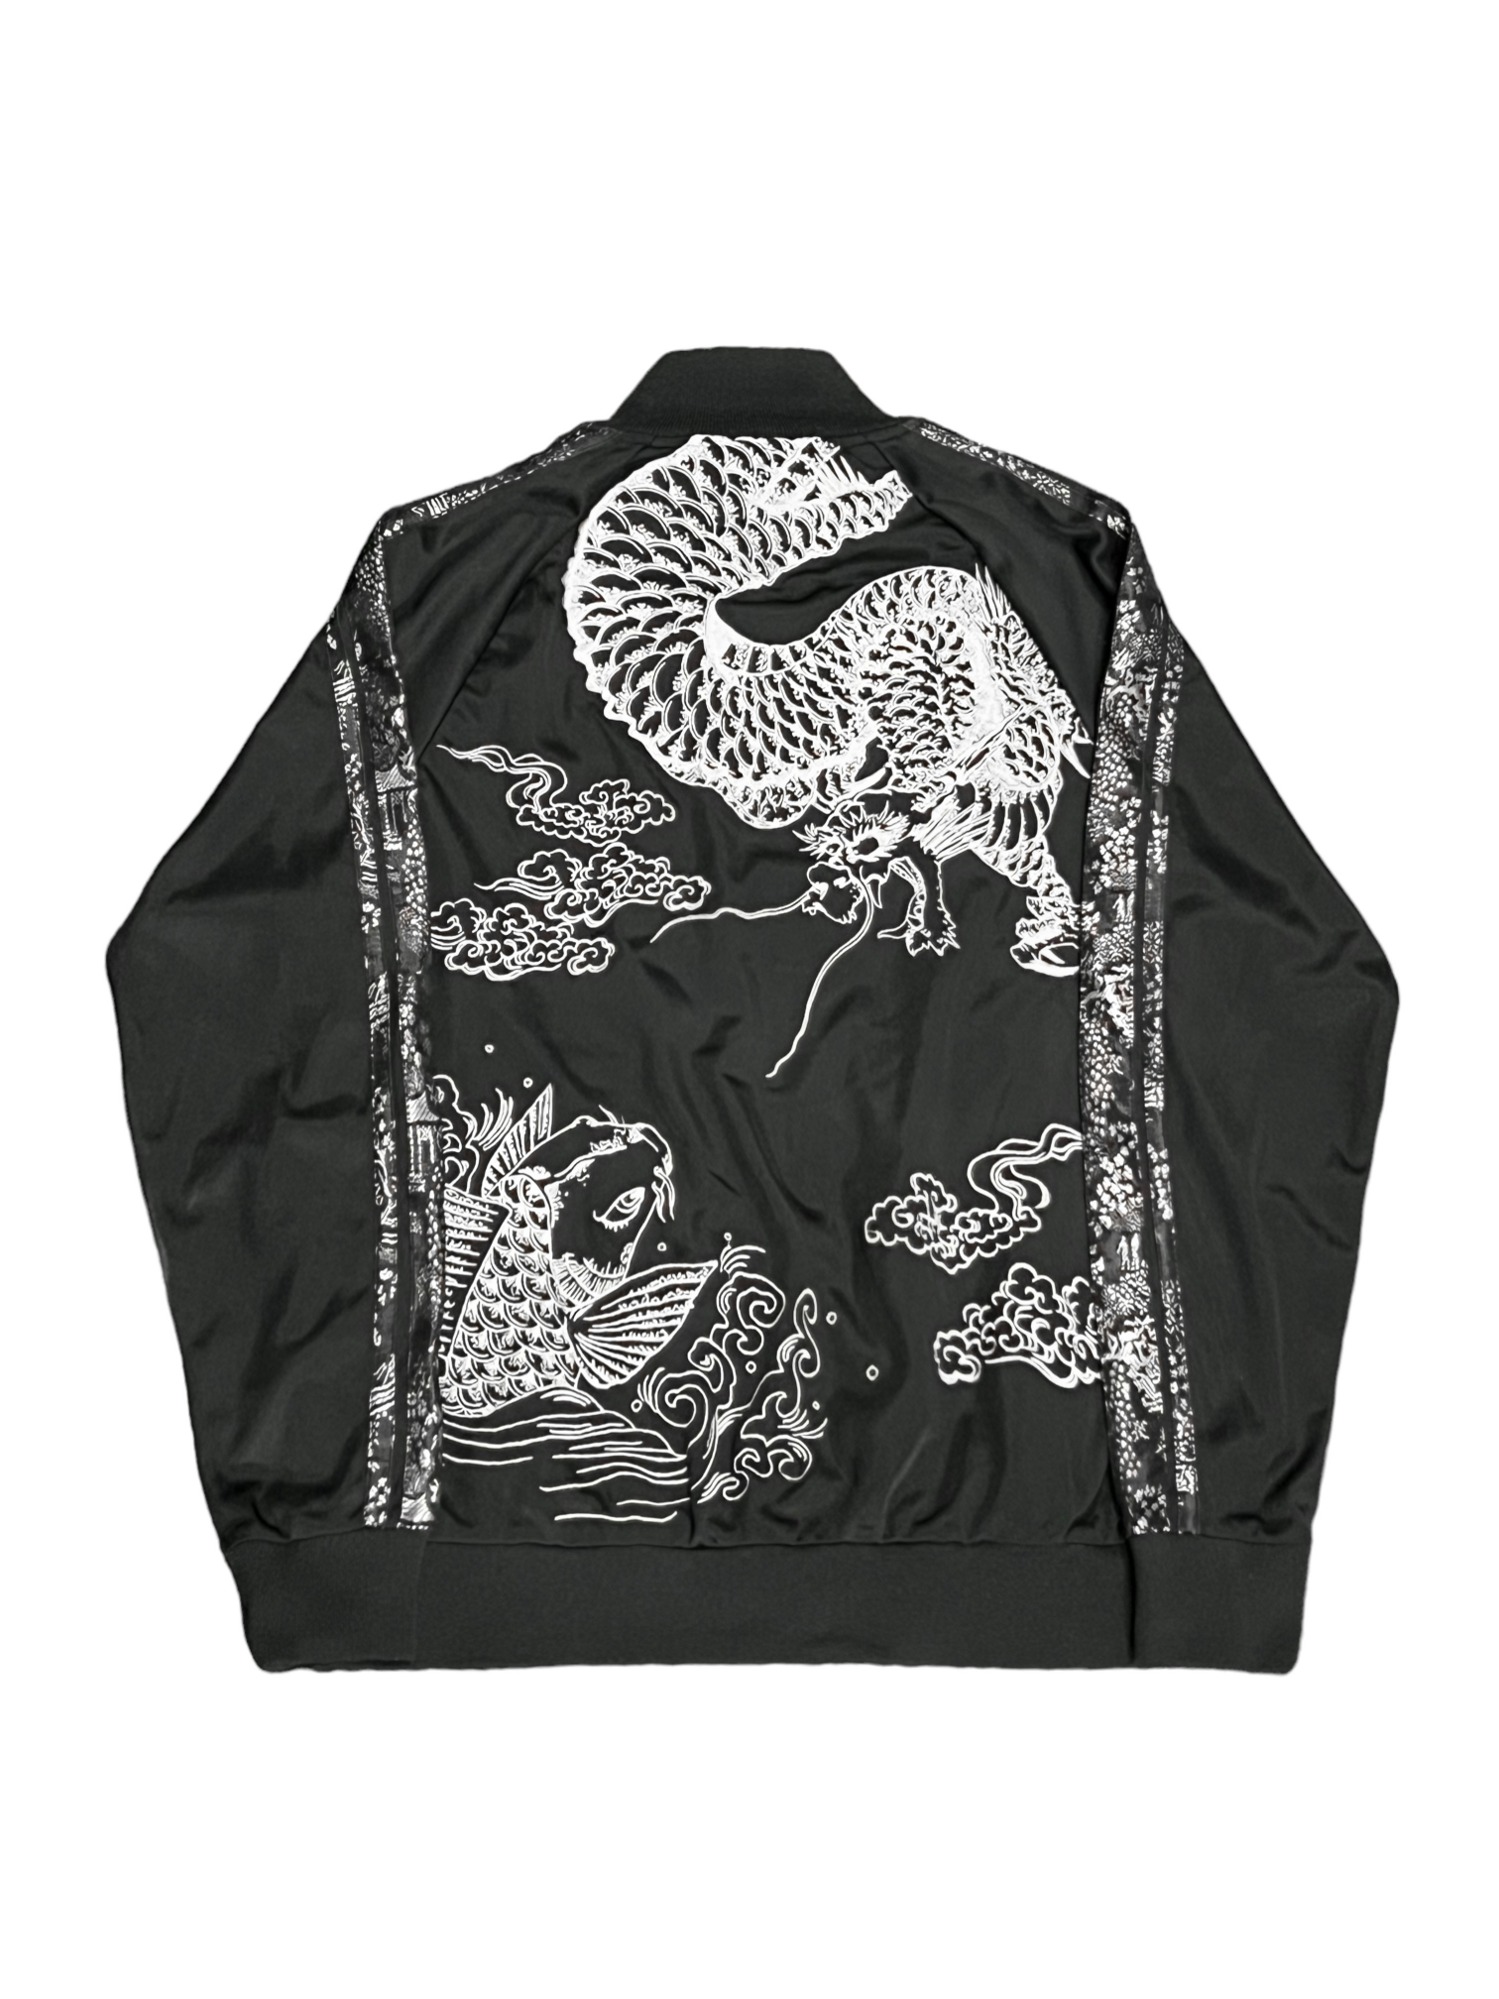 百花繚乱 백화요란 Dragon &amp; Koi Embroidery Jersey (black)